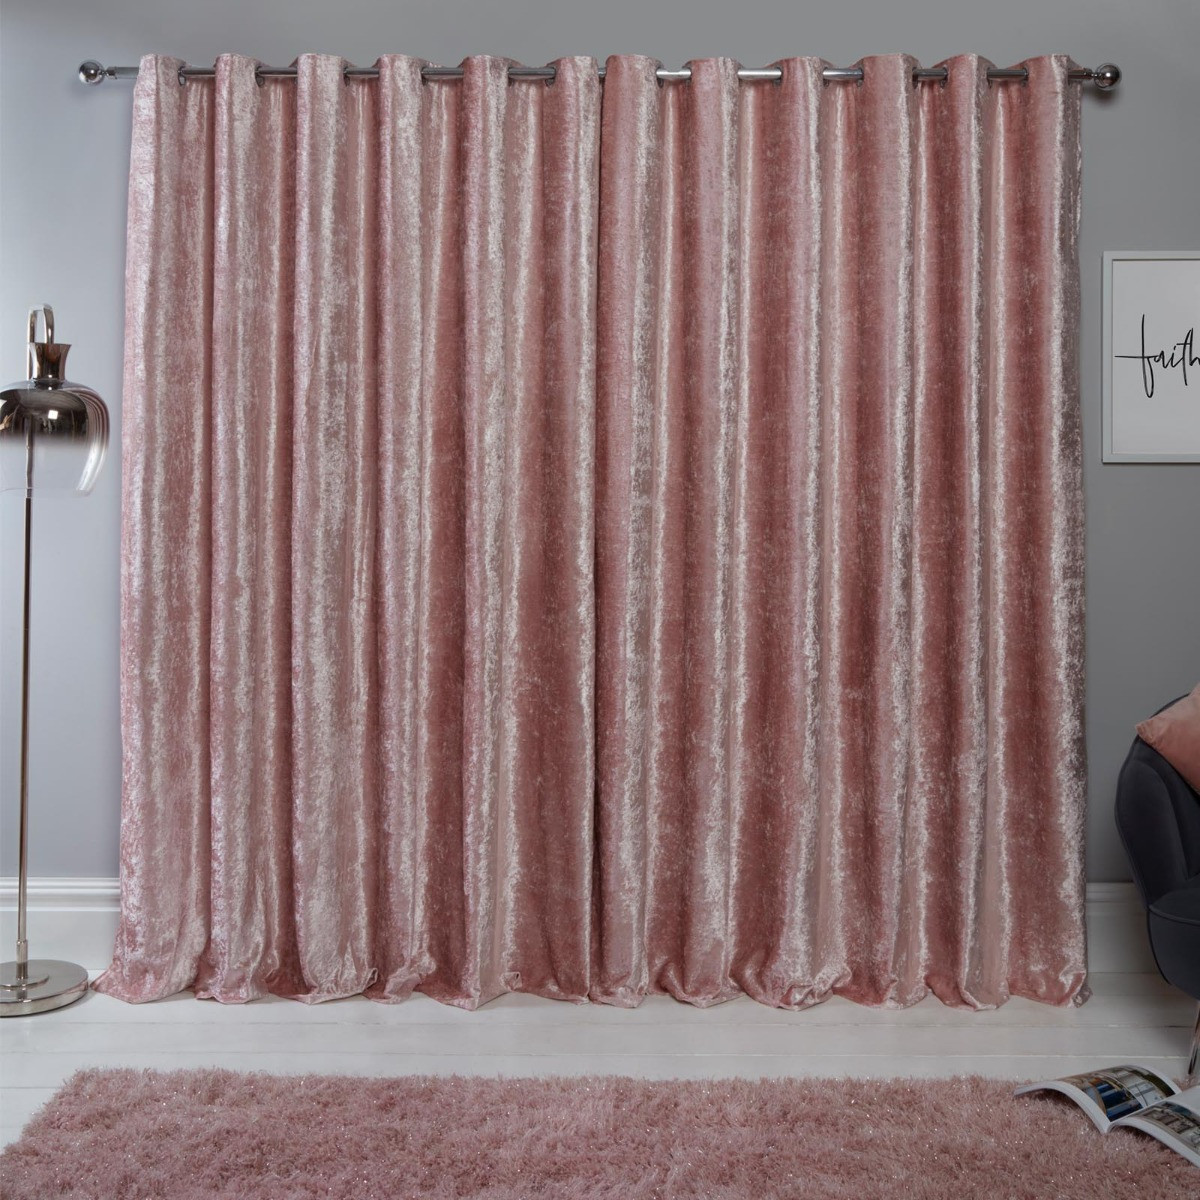 Sienna Home Crushed Velvet Eyelet Curtains, Blush Pink - 46" x 72">